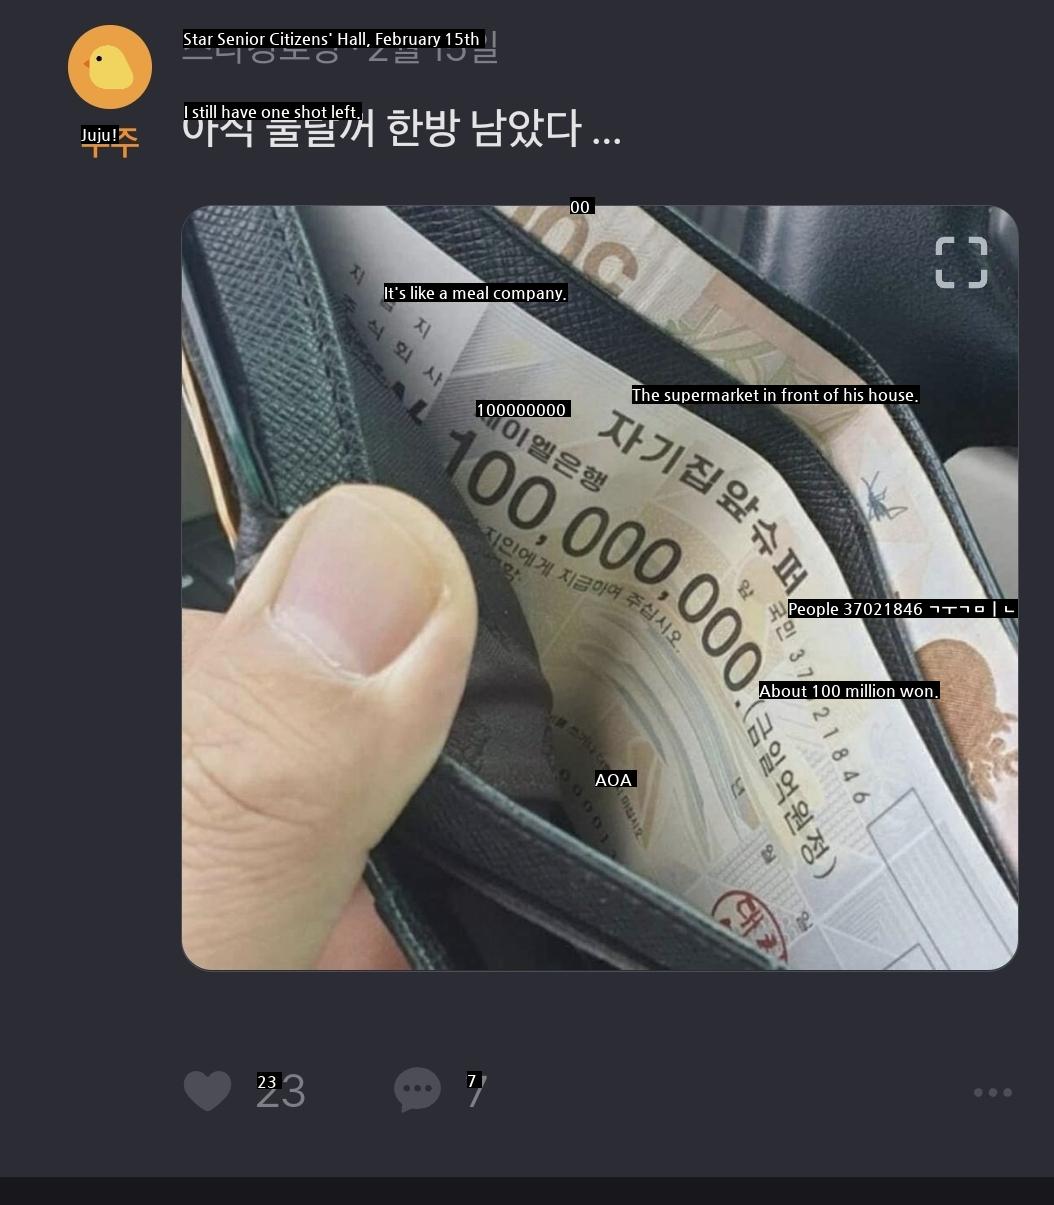 100 million won worth of super authentication.